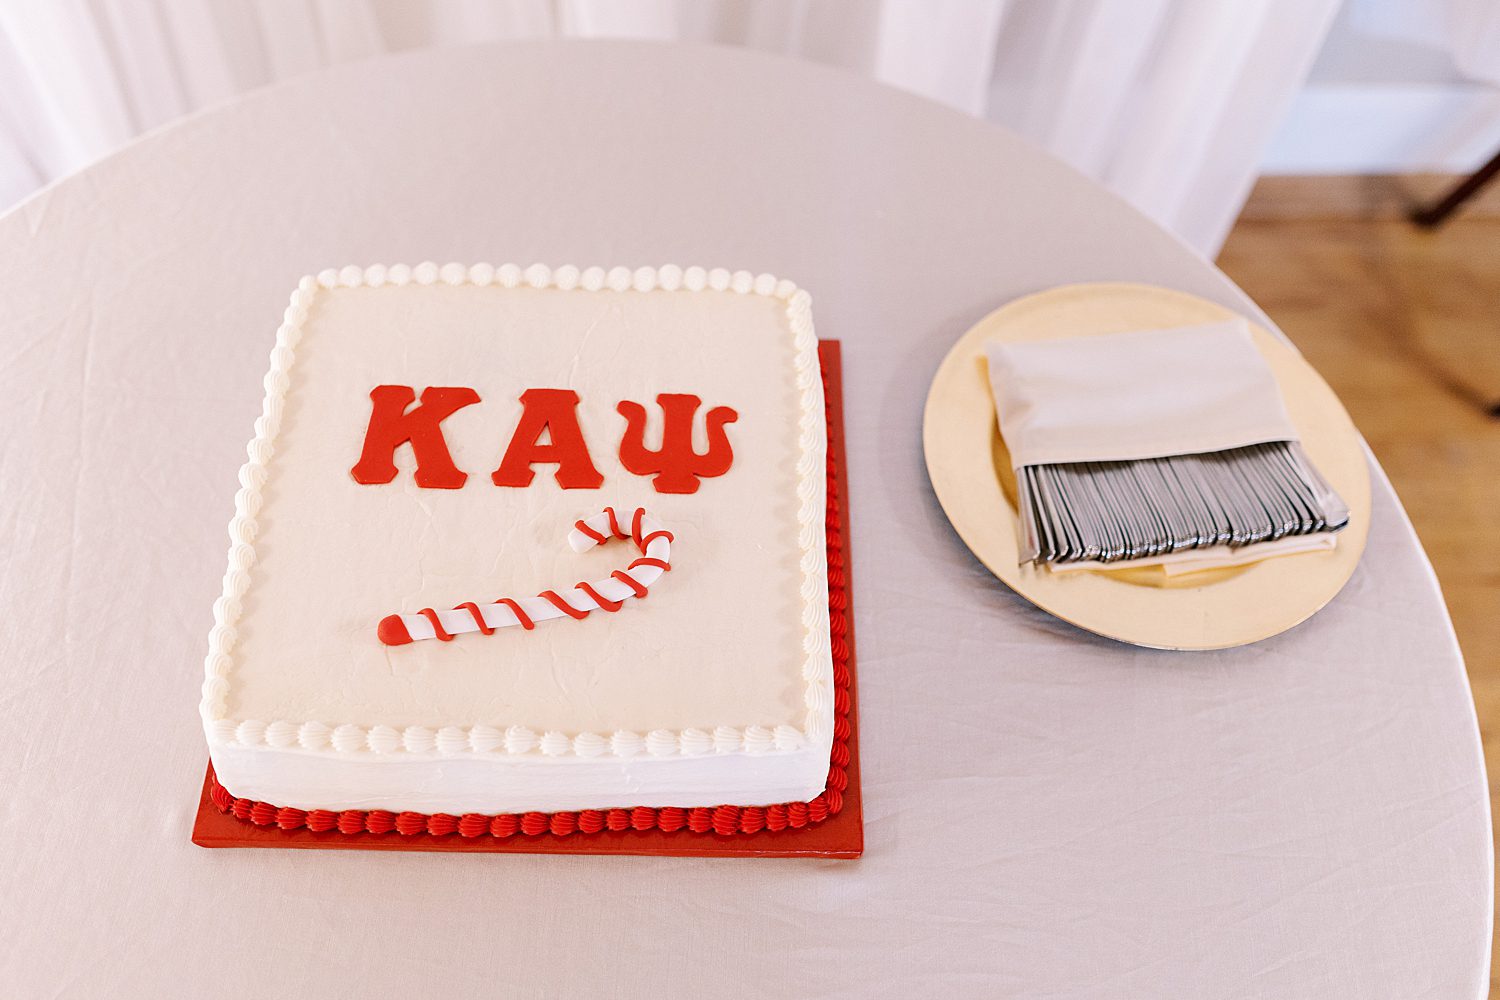 custom KAU cake for wedding reception 